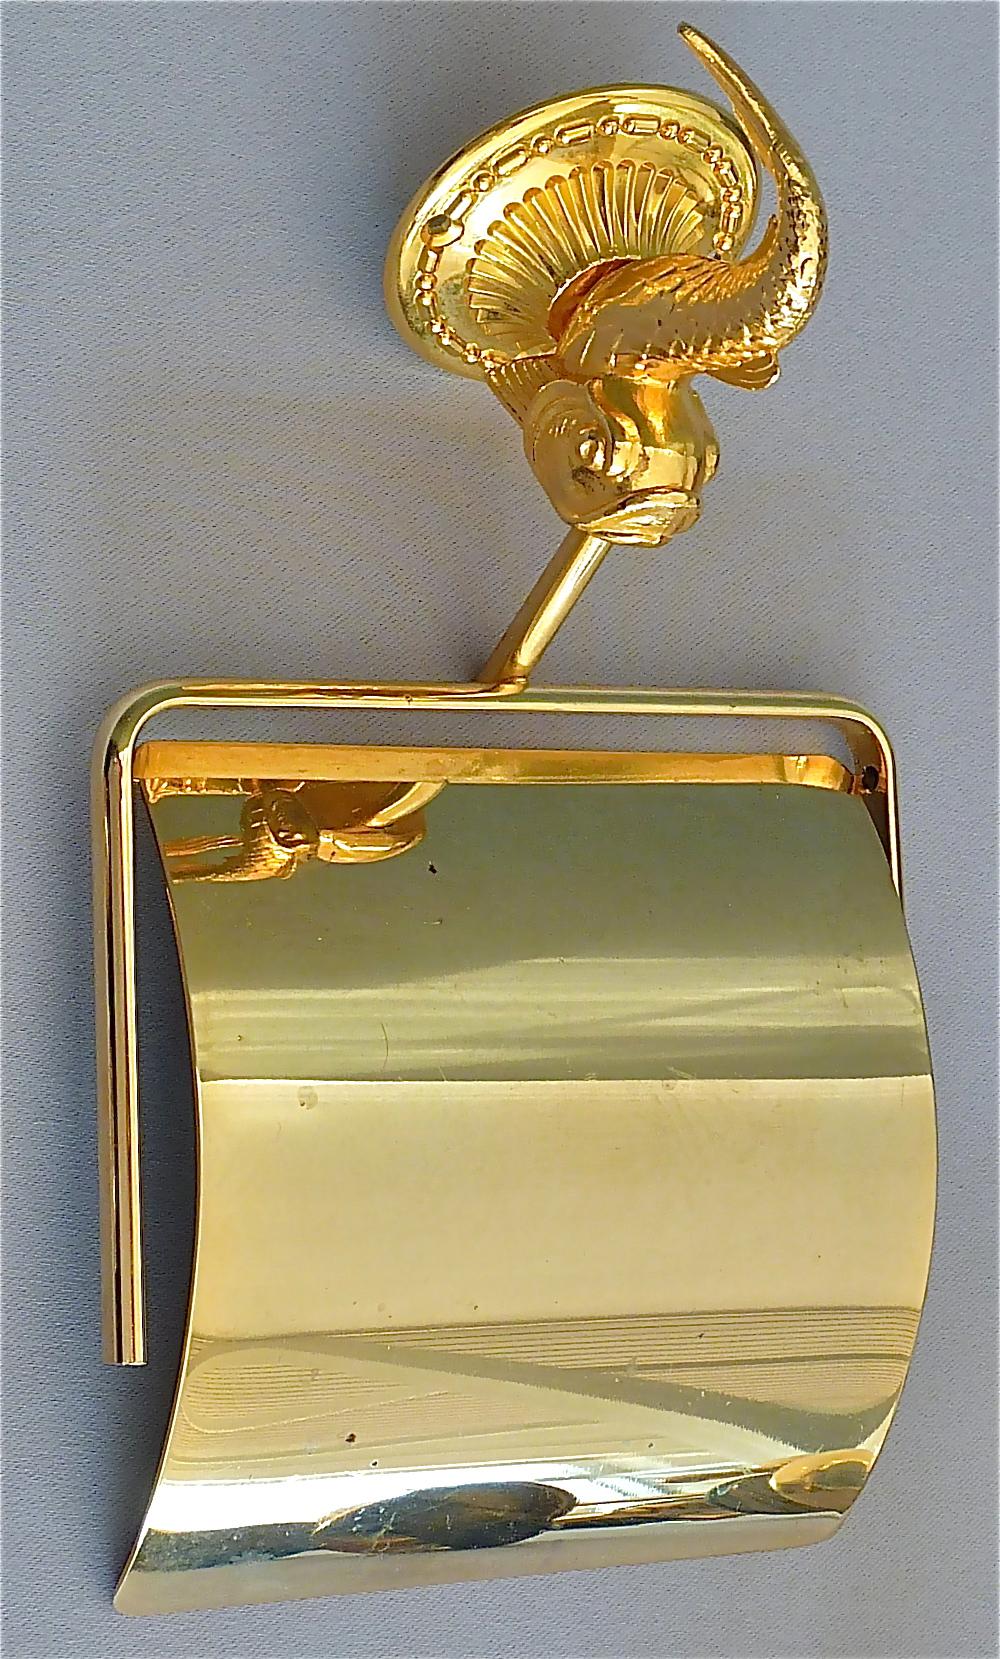 Italian Luxus Zazzeri Gilt Brass Bathroom Fixture Set of 30, 1970-80 Vintage For Sale 11